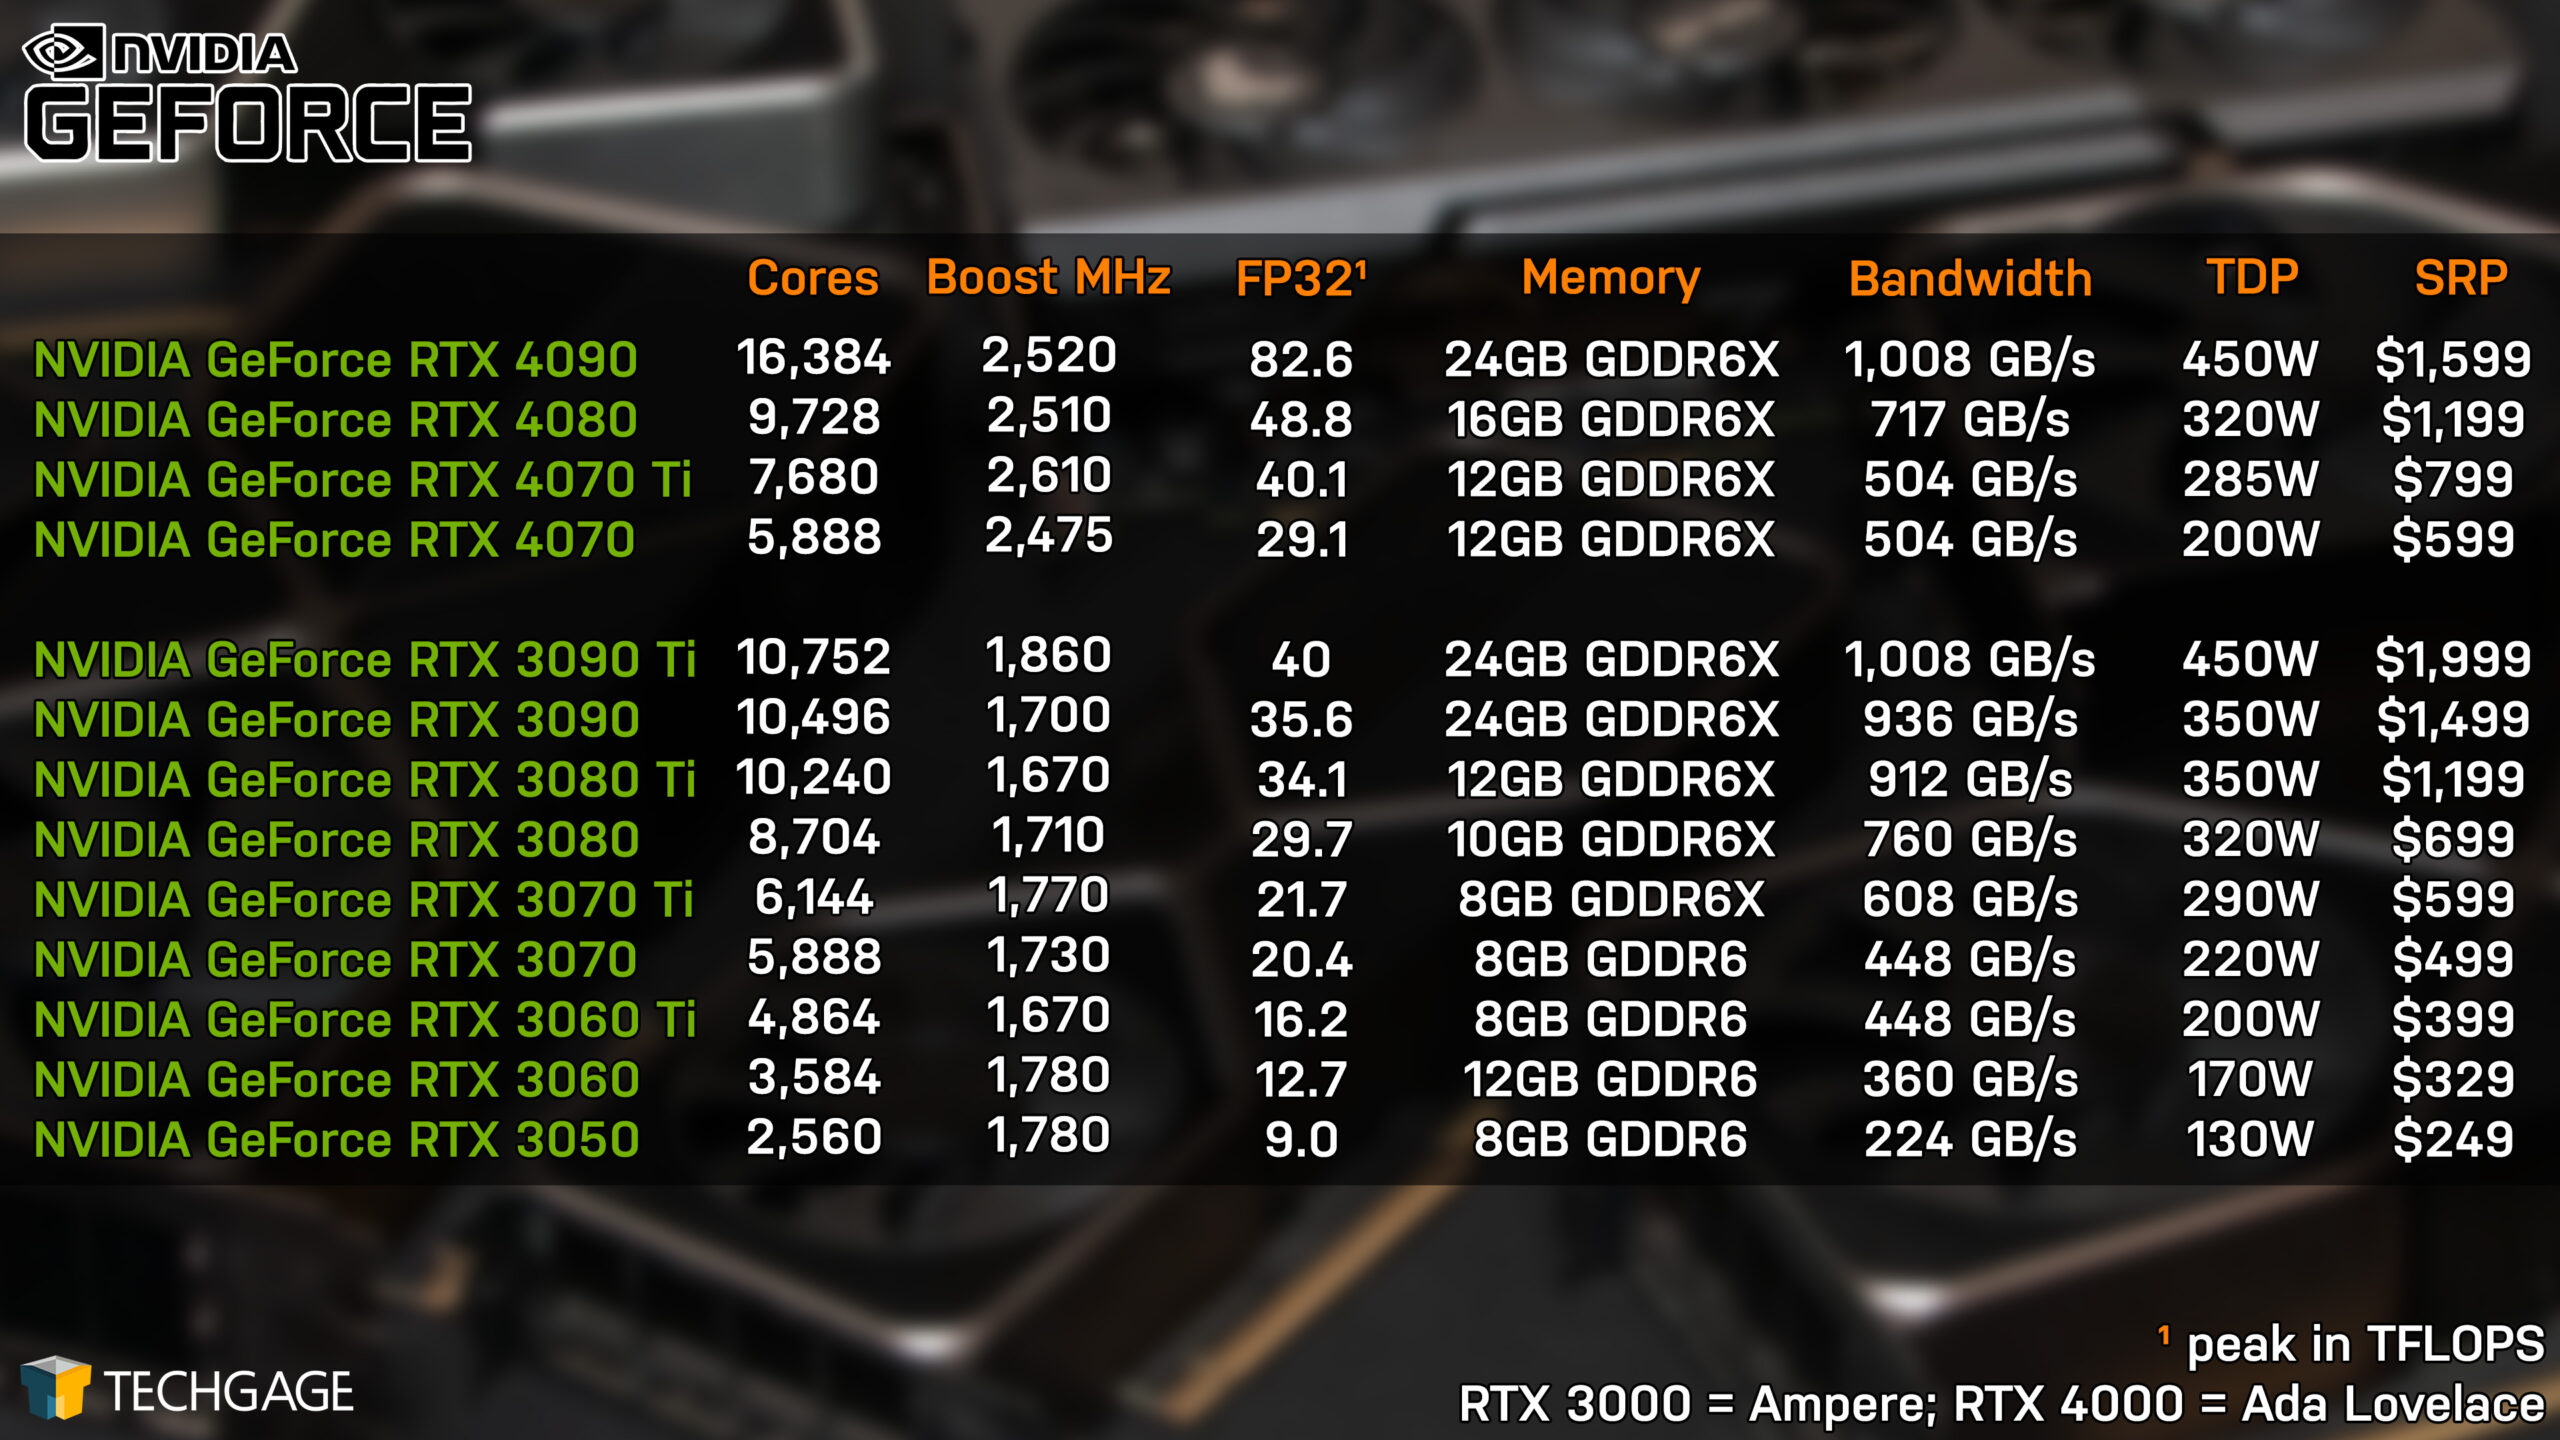 NVIDIA GeForce GPU Lineup (RTX 4070 Launch)